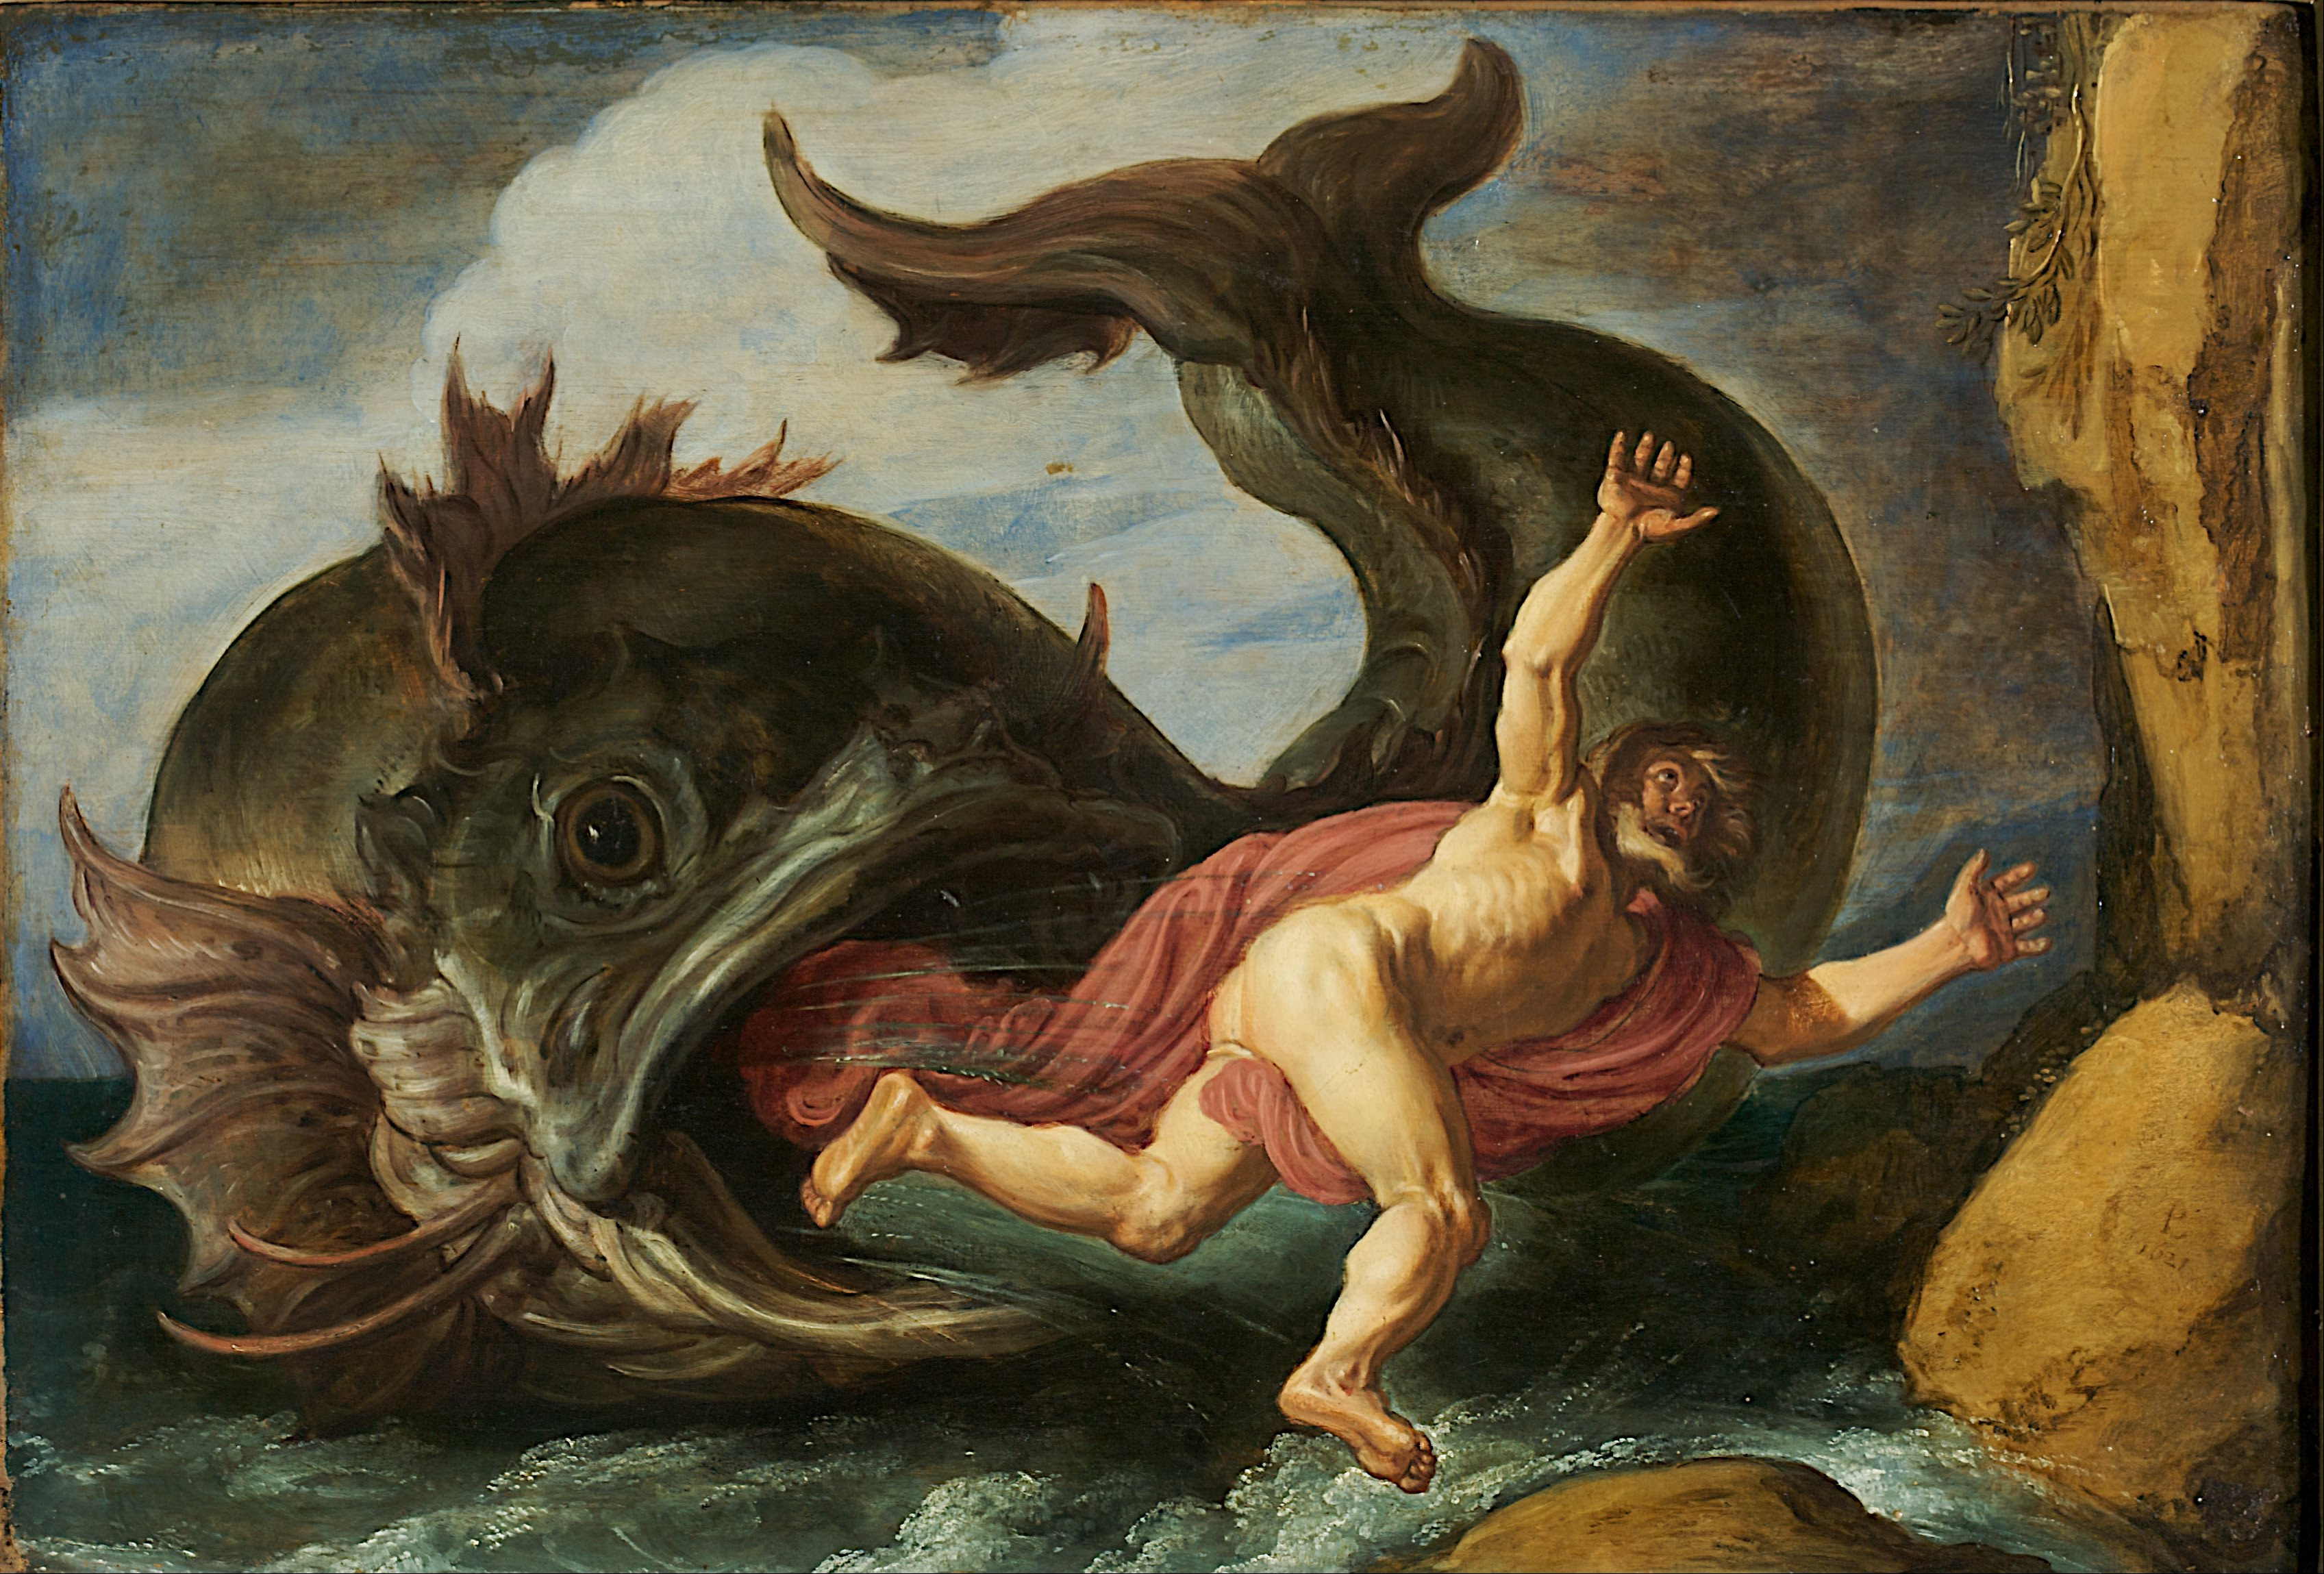 http://upload.wikimedia.org/wikipedia/commons/4/44/Pieter_Lastman_-_Jonah_and_the_Whale_-_Google_Art_Project.jpg